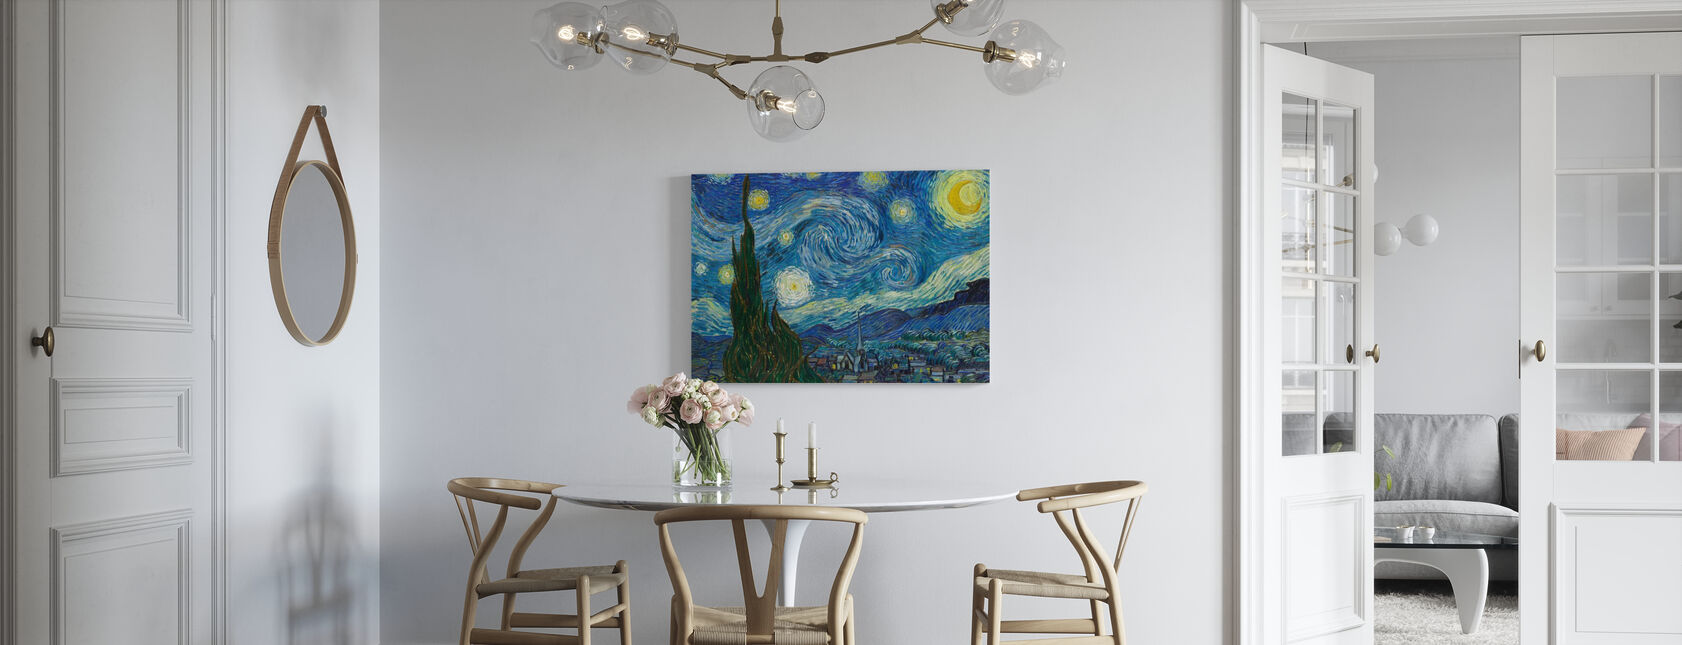 Vincent Van Gogh - Starry Night - Canvas print - Kitchen